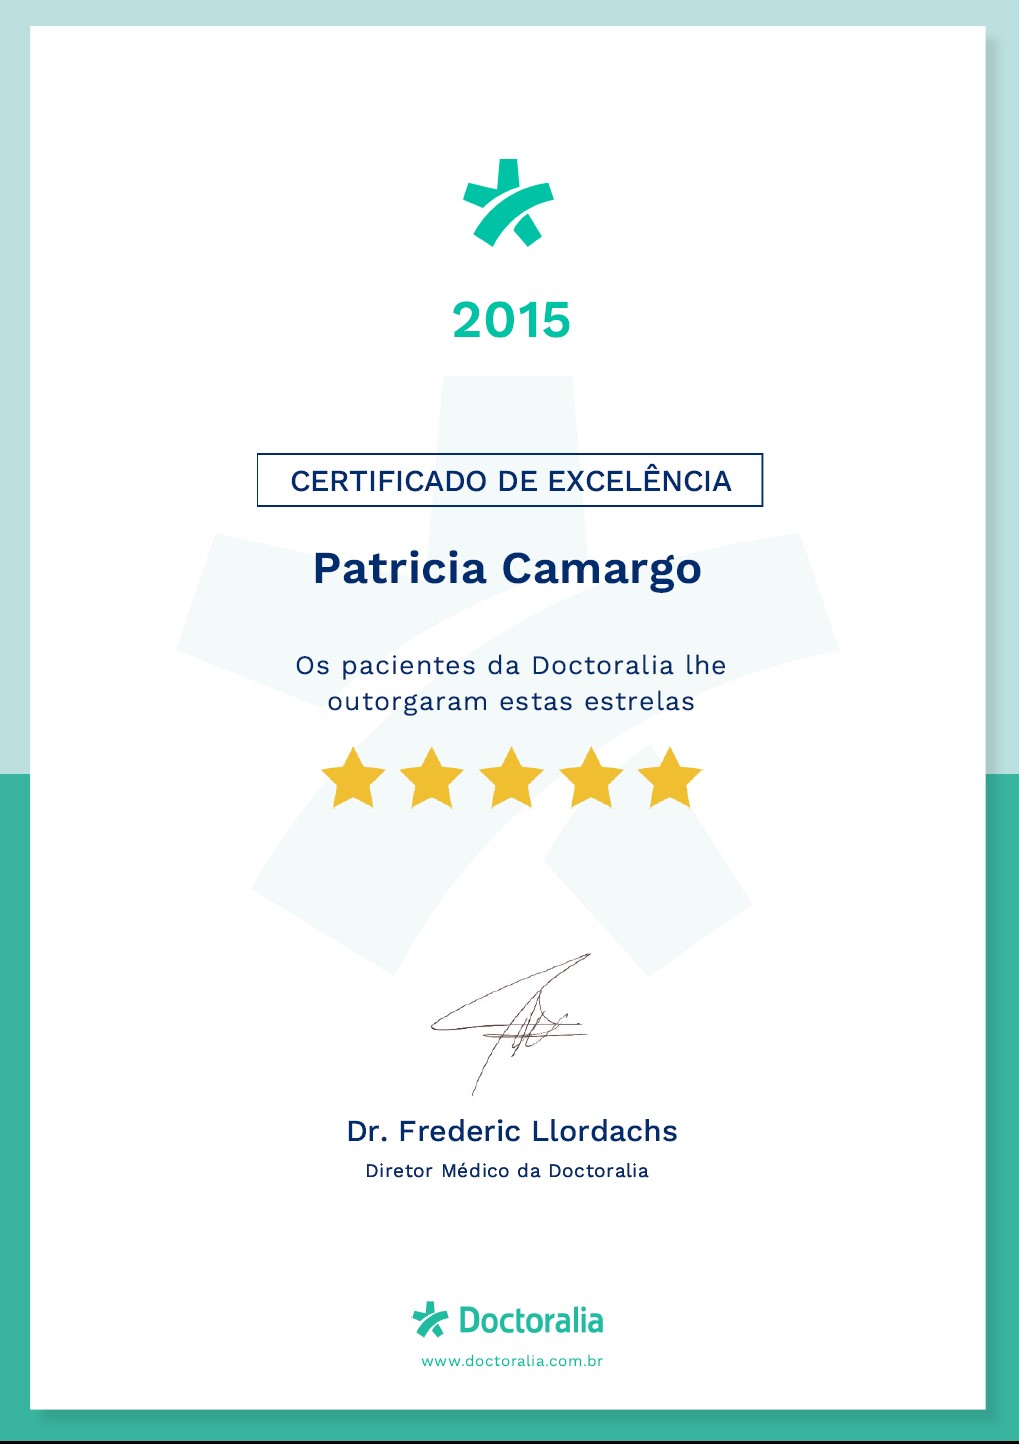 Certificado de Excelência Doctoralia 2015